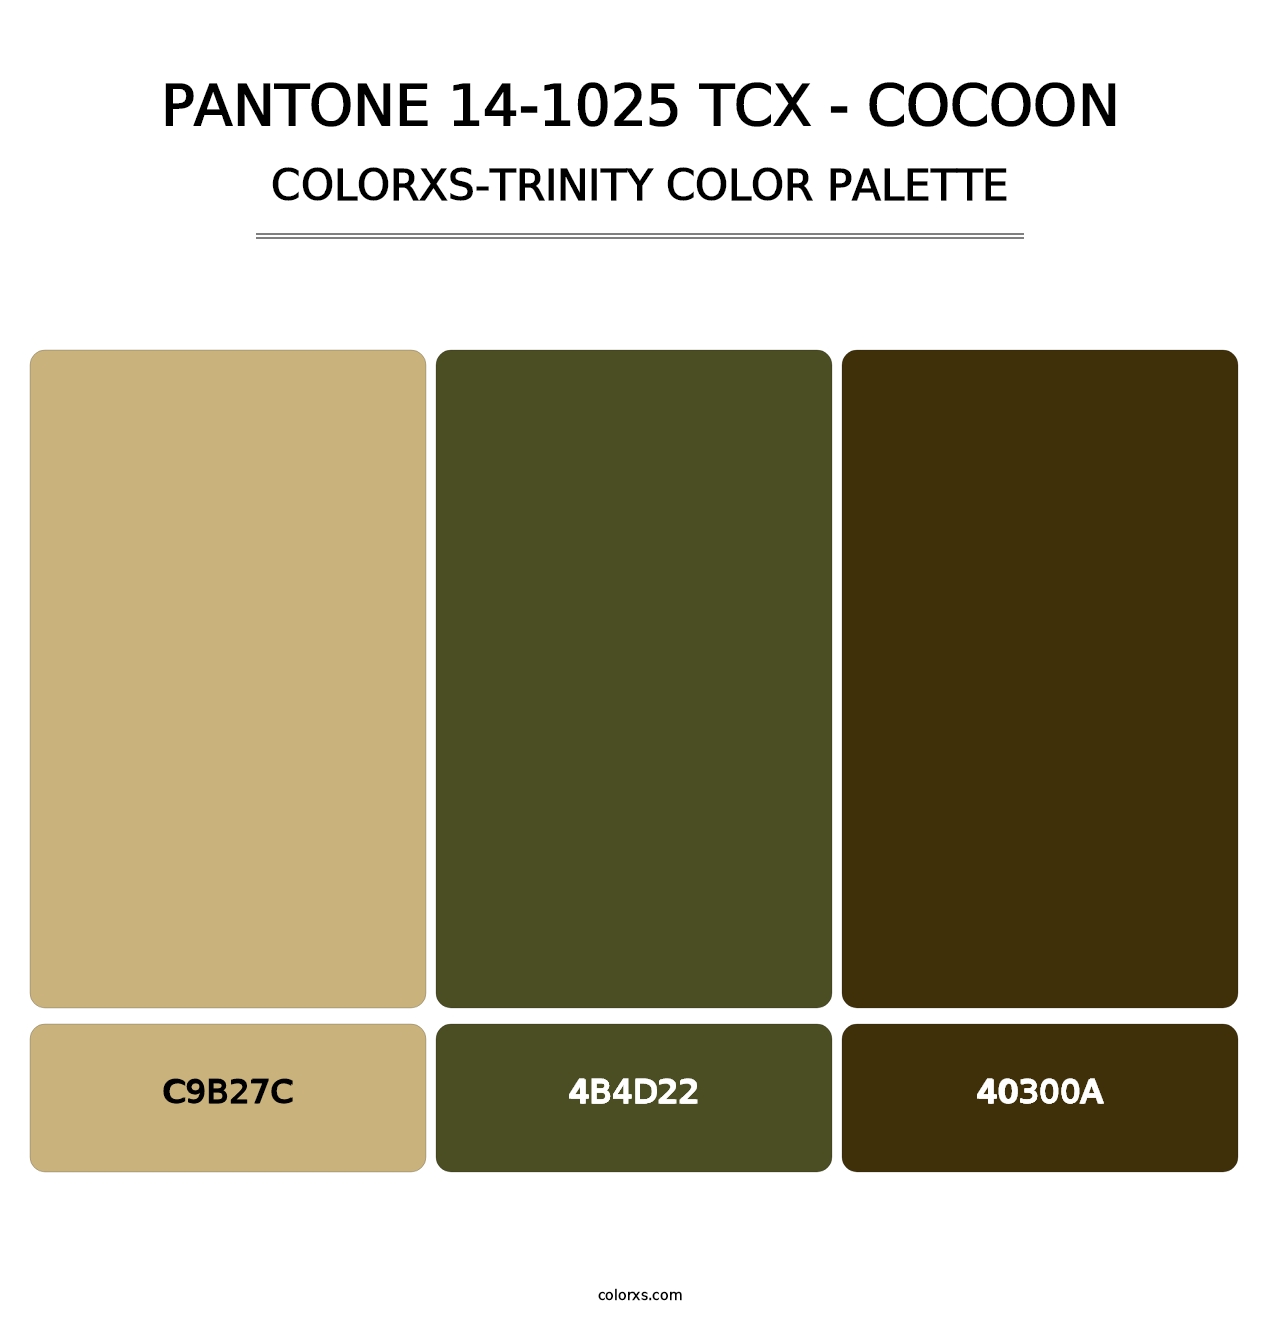 PANTONE 14-1025 TCX - Cocoon - Colorxs Trinity Palette